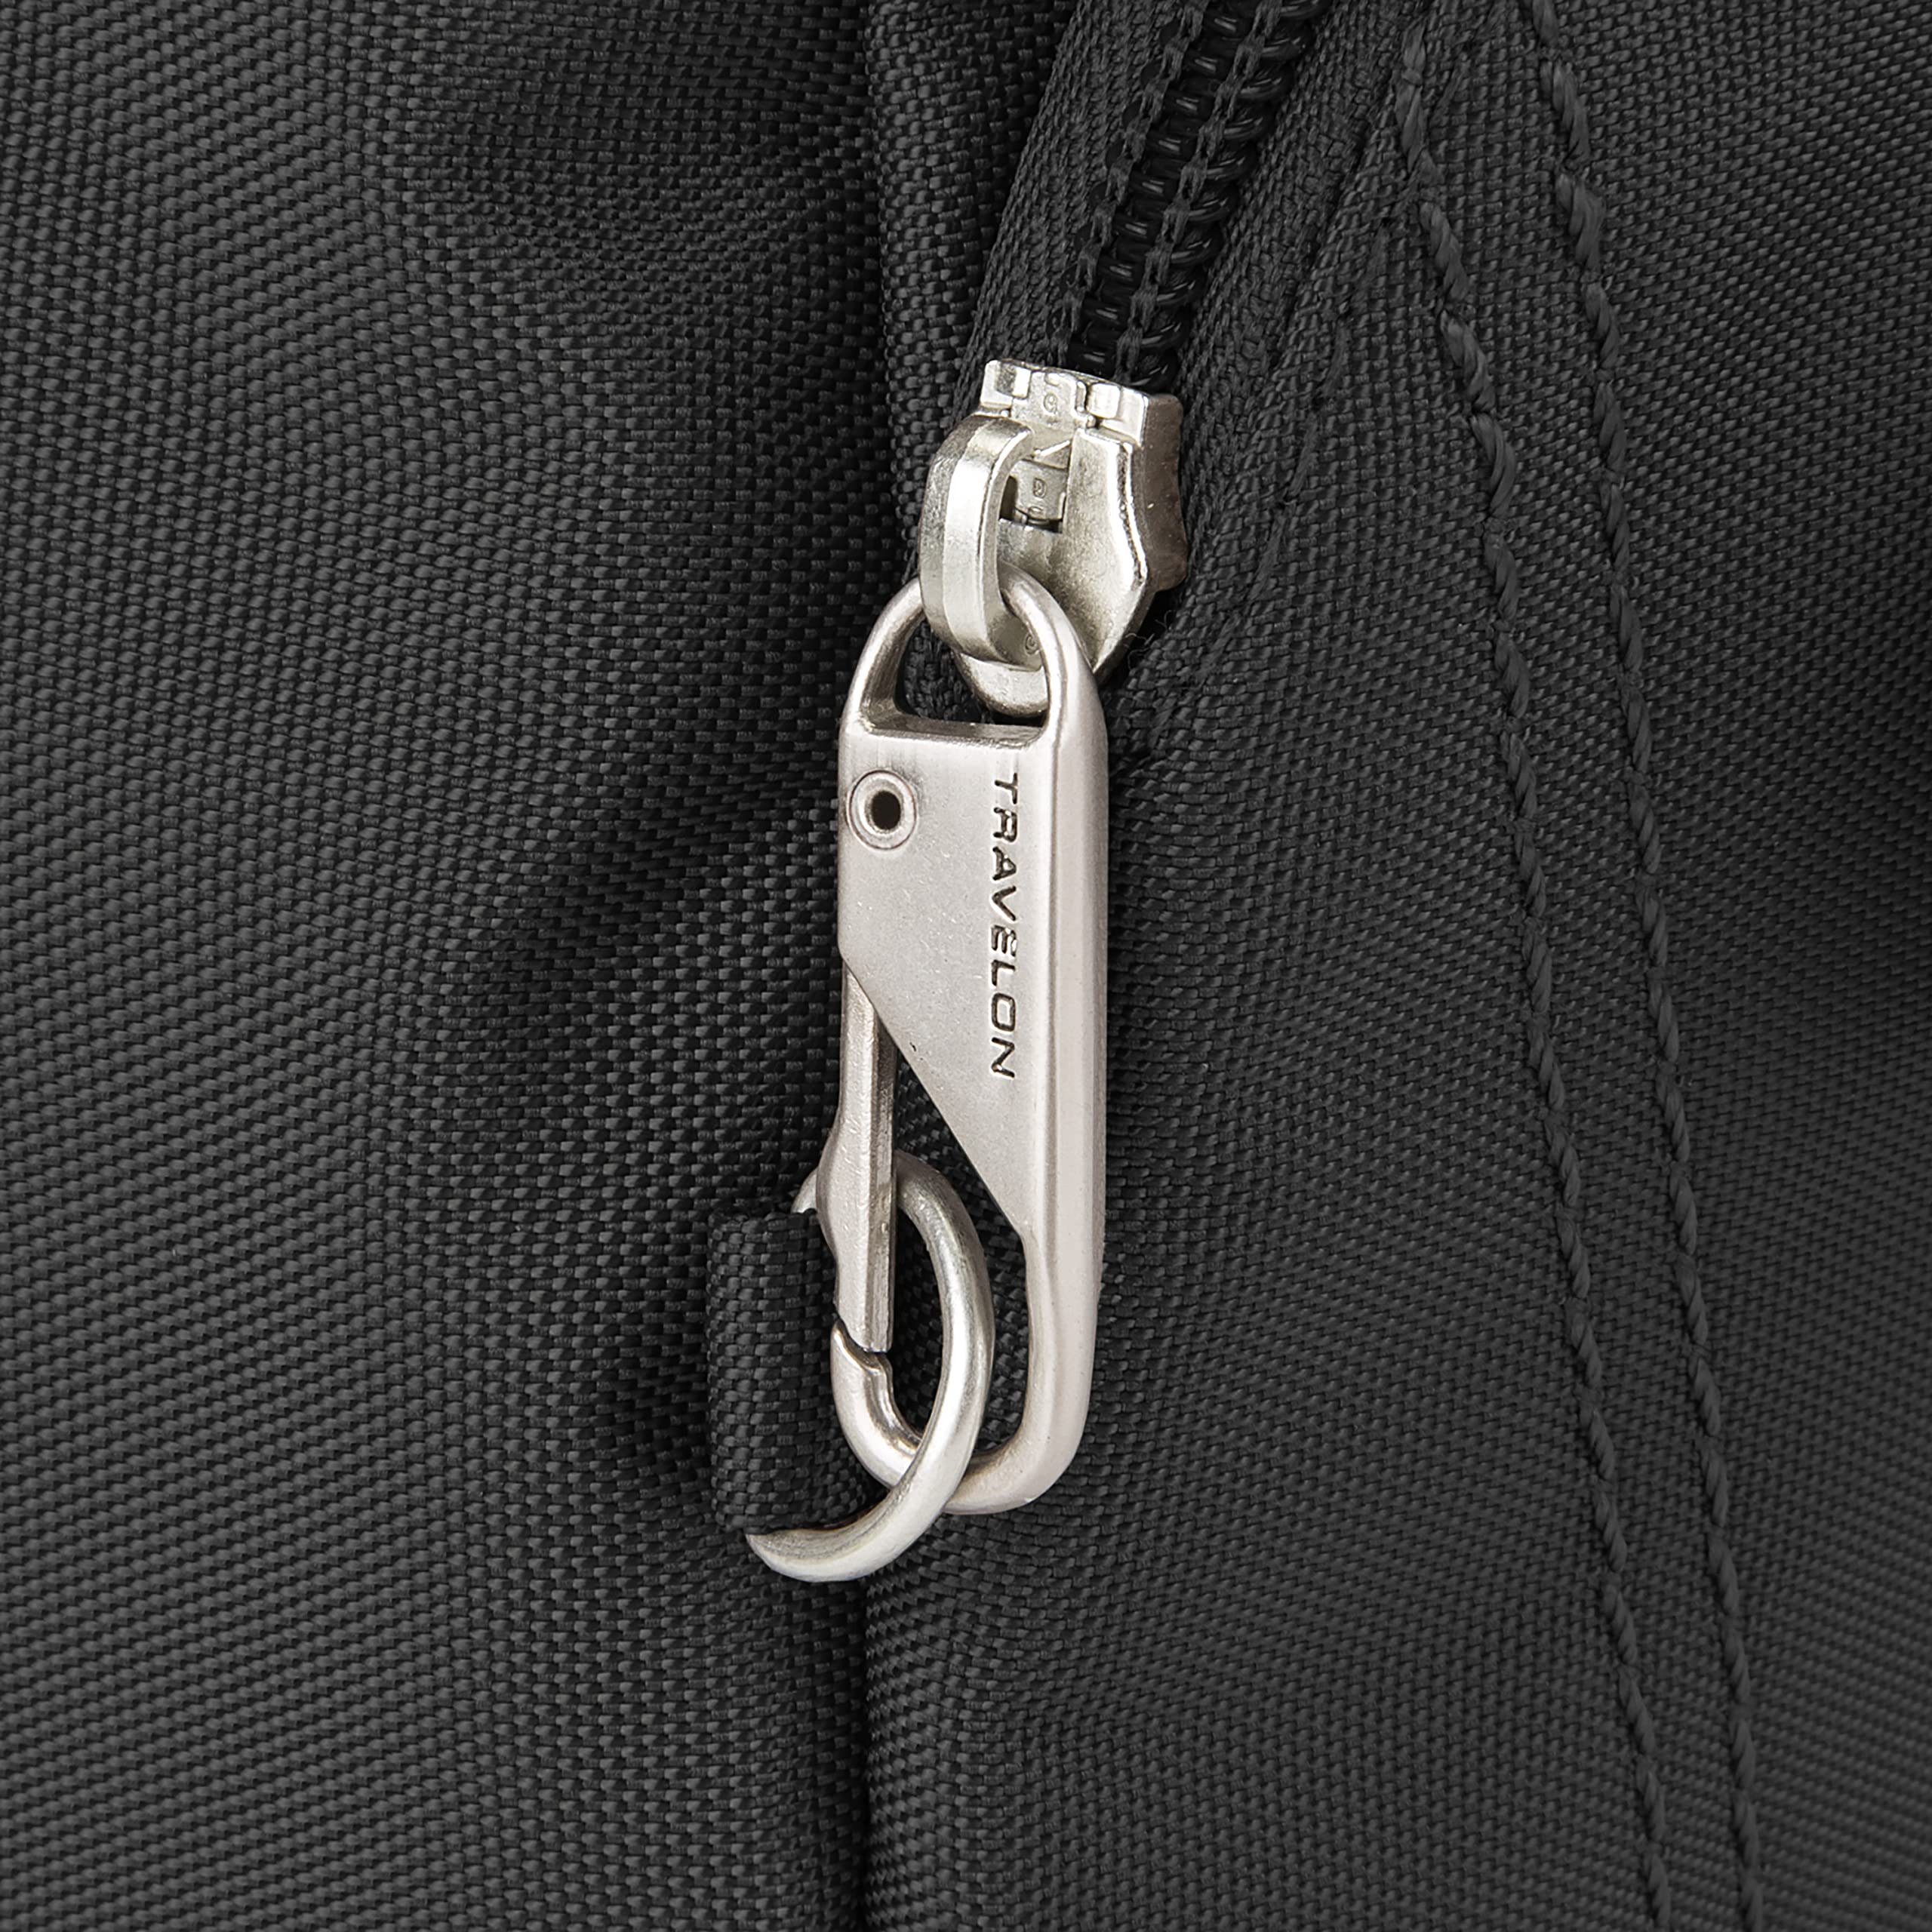 Travelon Anti-Theft Classic Essential Messenger Bag, Black, One Size, 9.75 x 10 x 2.5